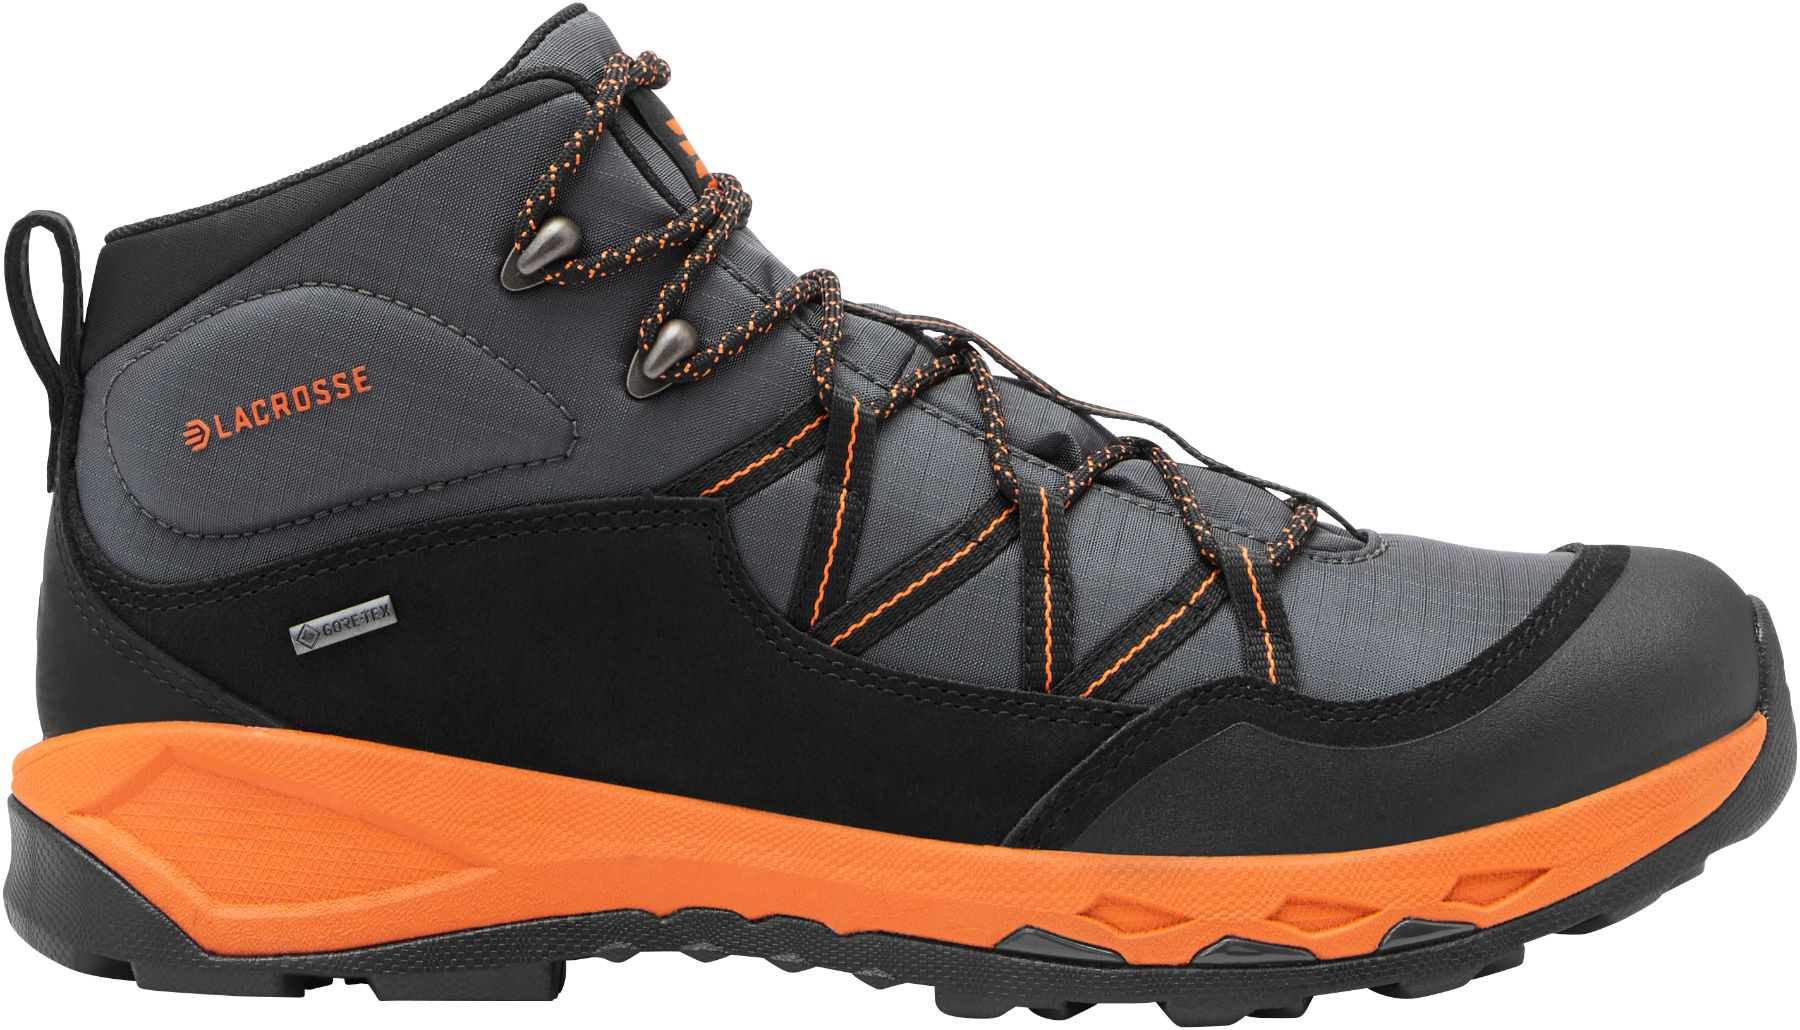 LaCrosse San Juan Mid GTX Waterproof Hunting Boots for Men - Gunmetal/Orange - 10.5W